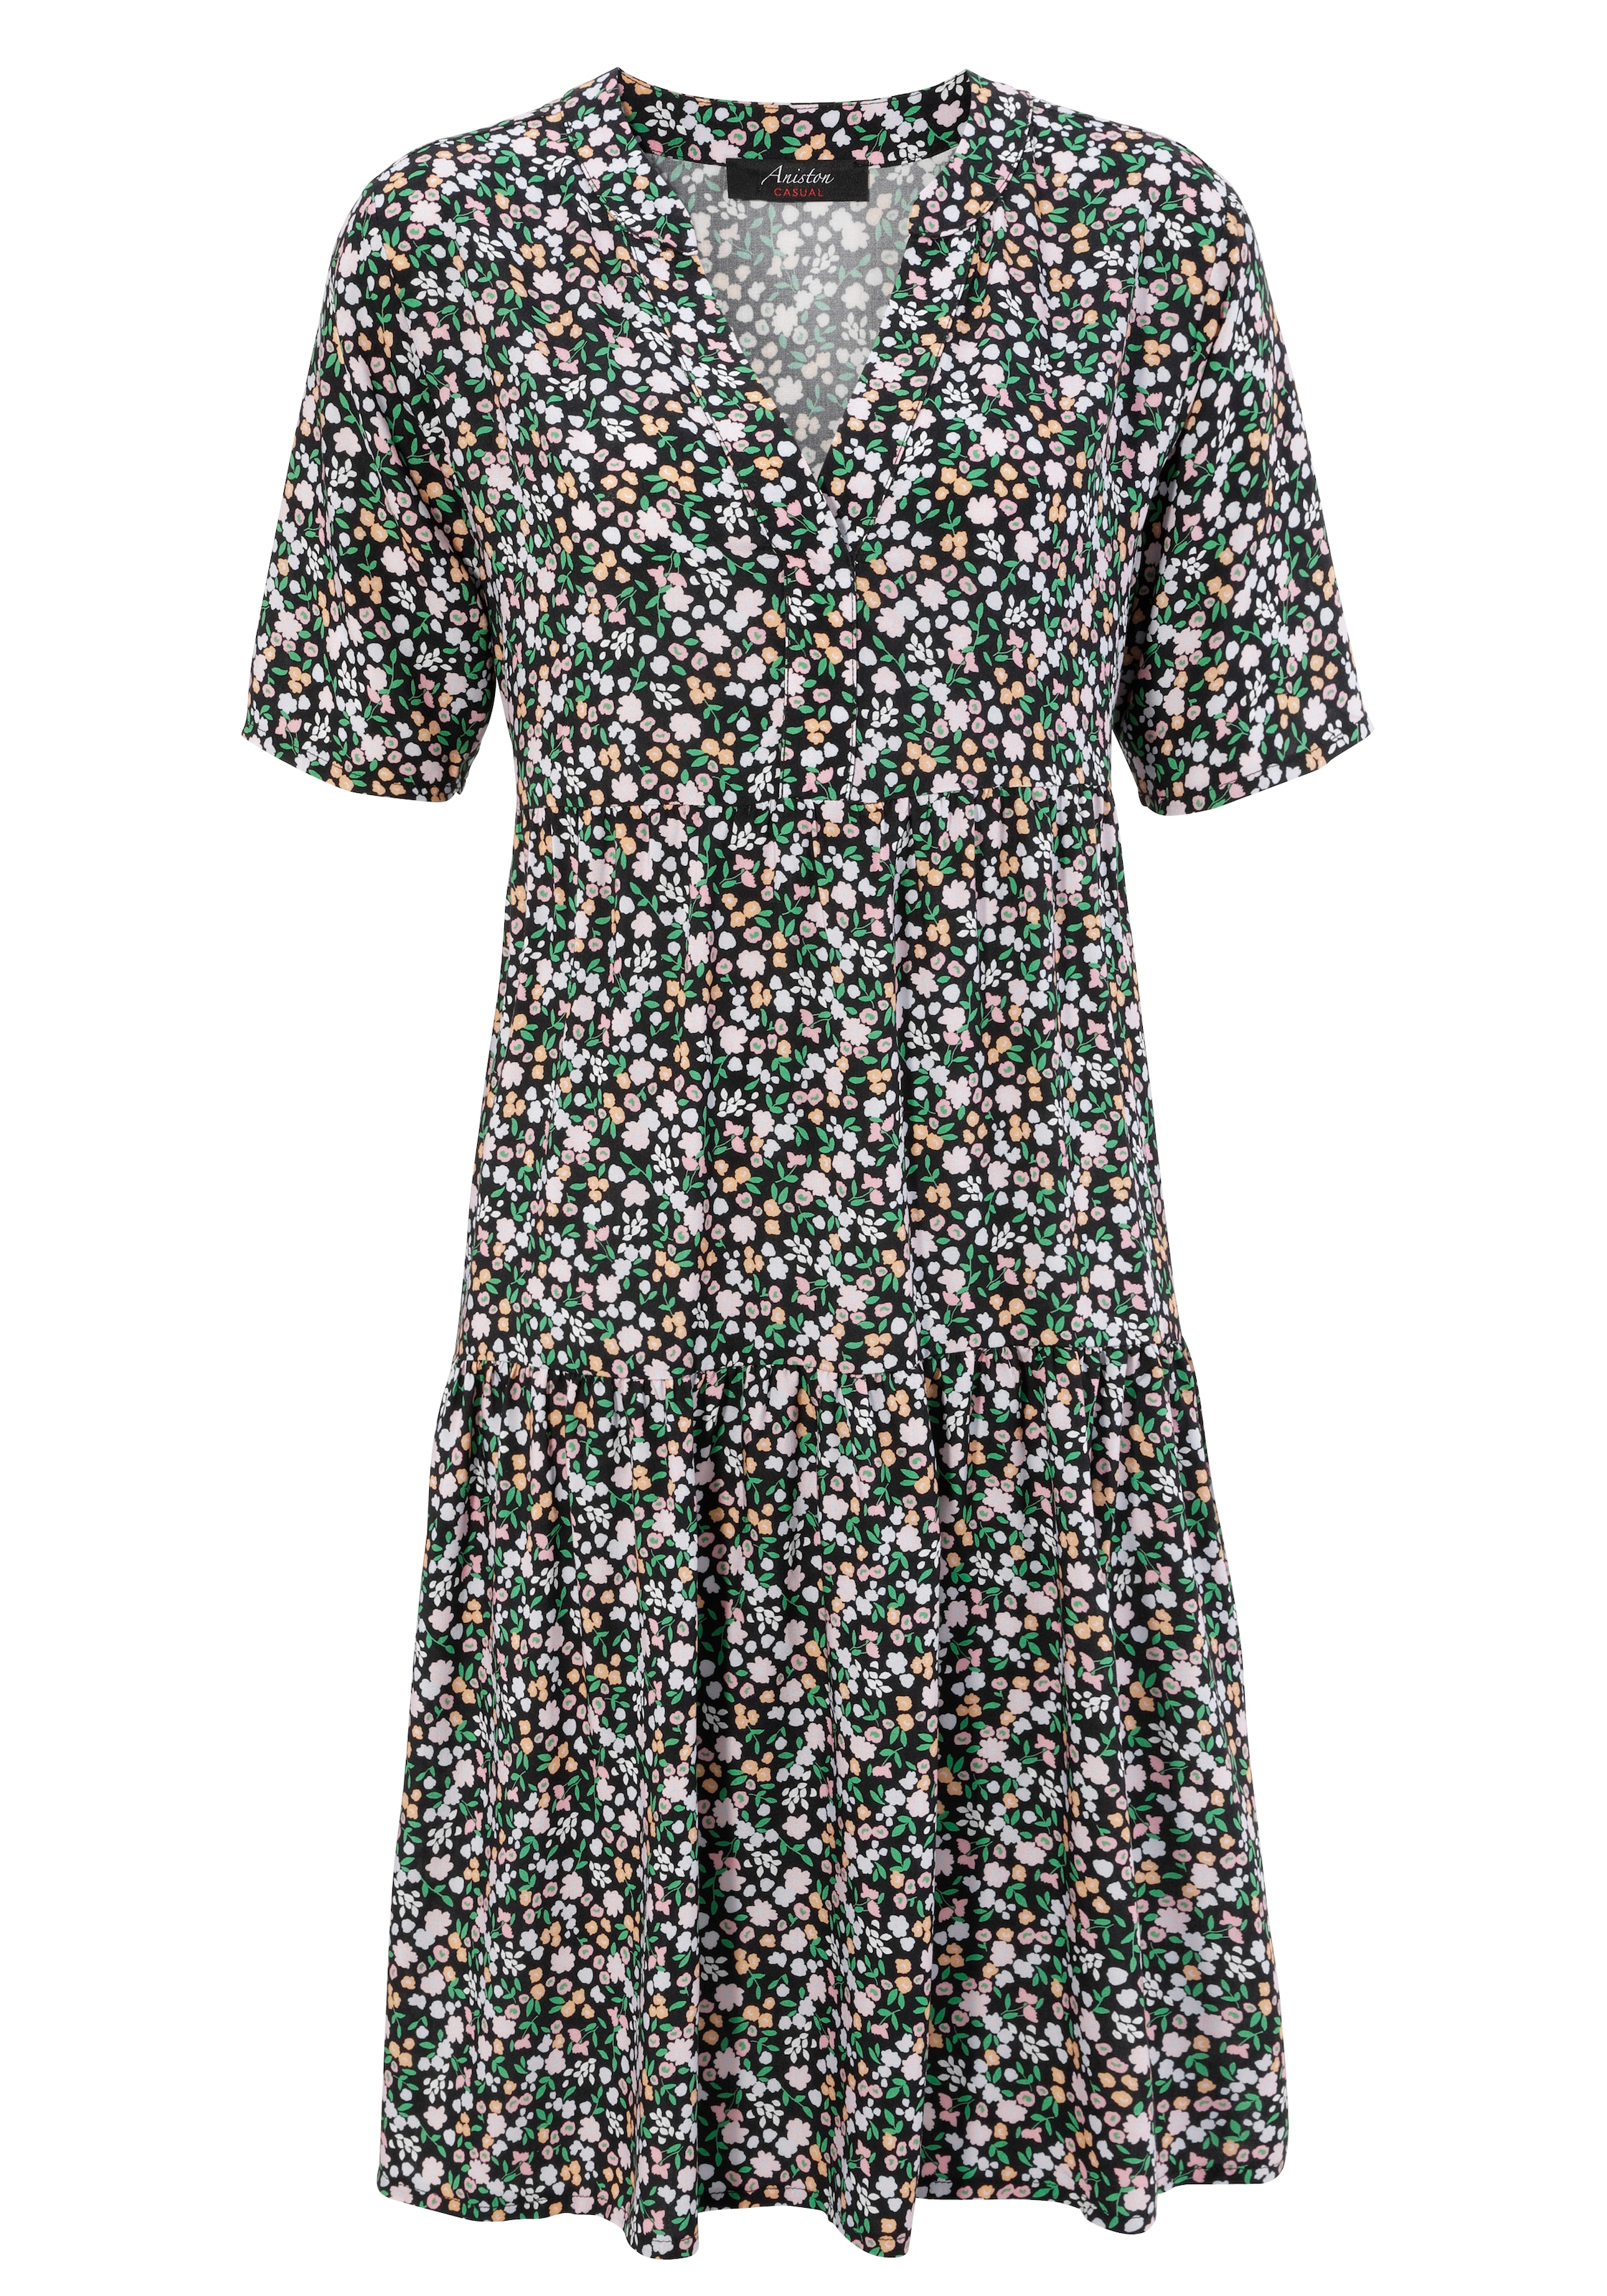 Aniston CASUAL Sommerkleid, mit buntem Minimal-Blumendruck